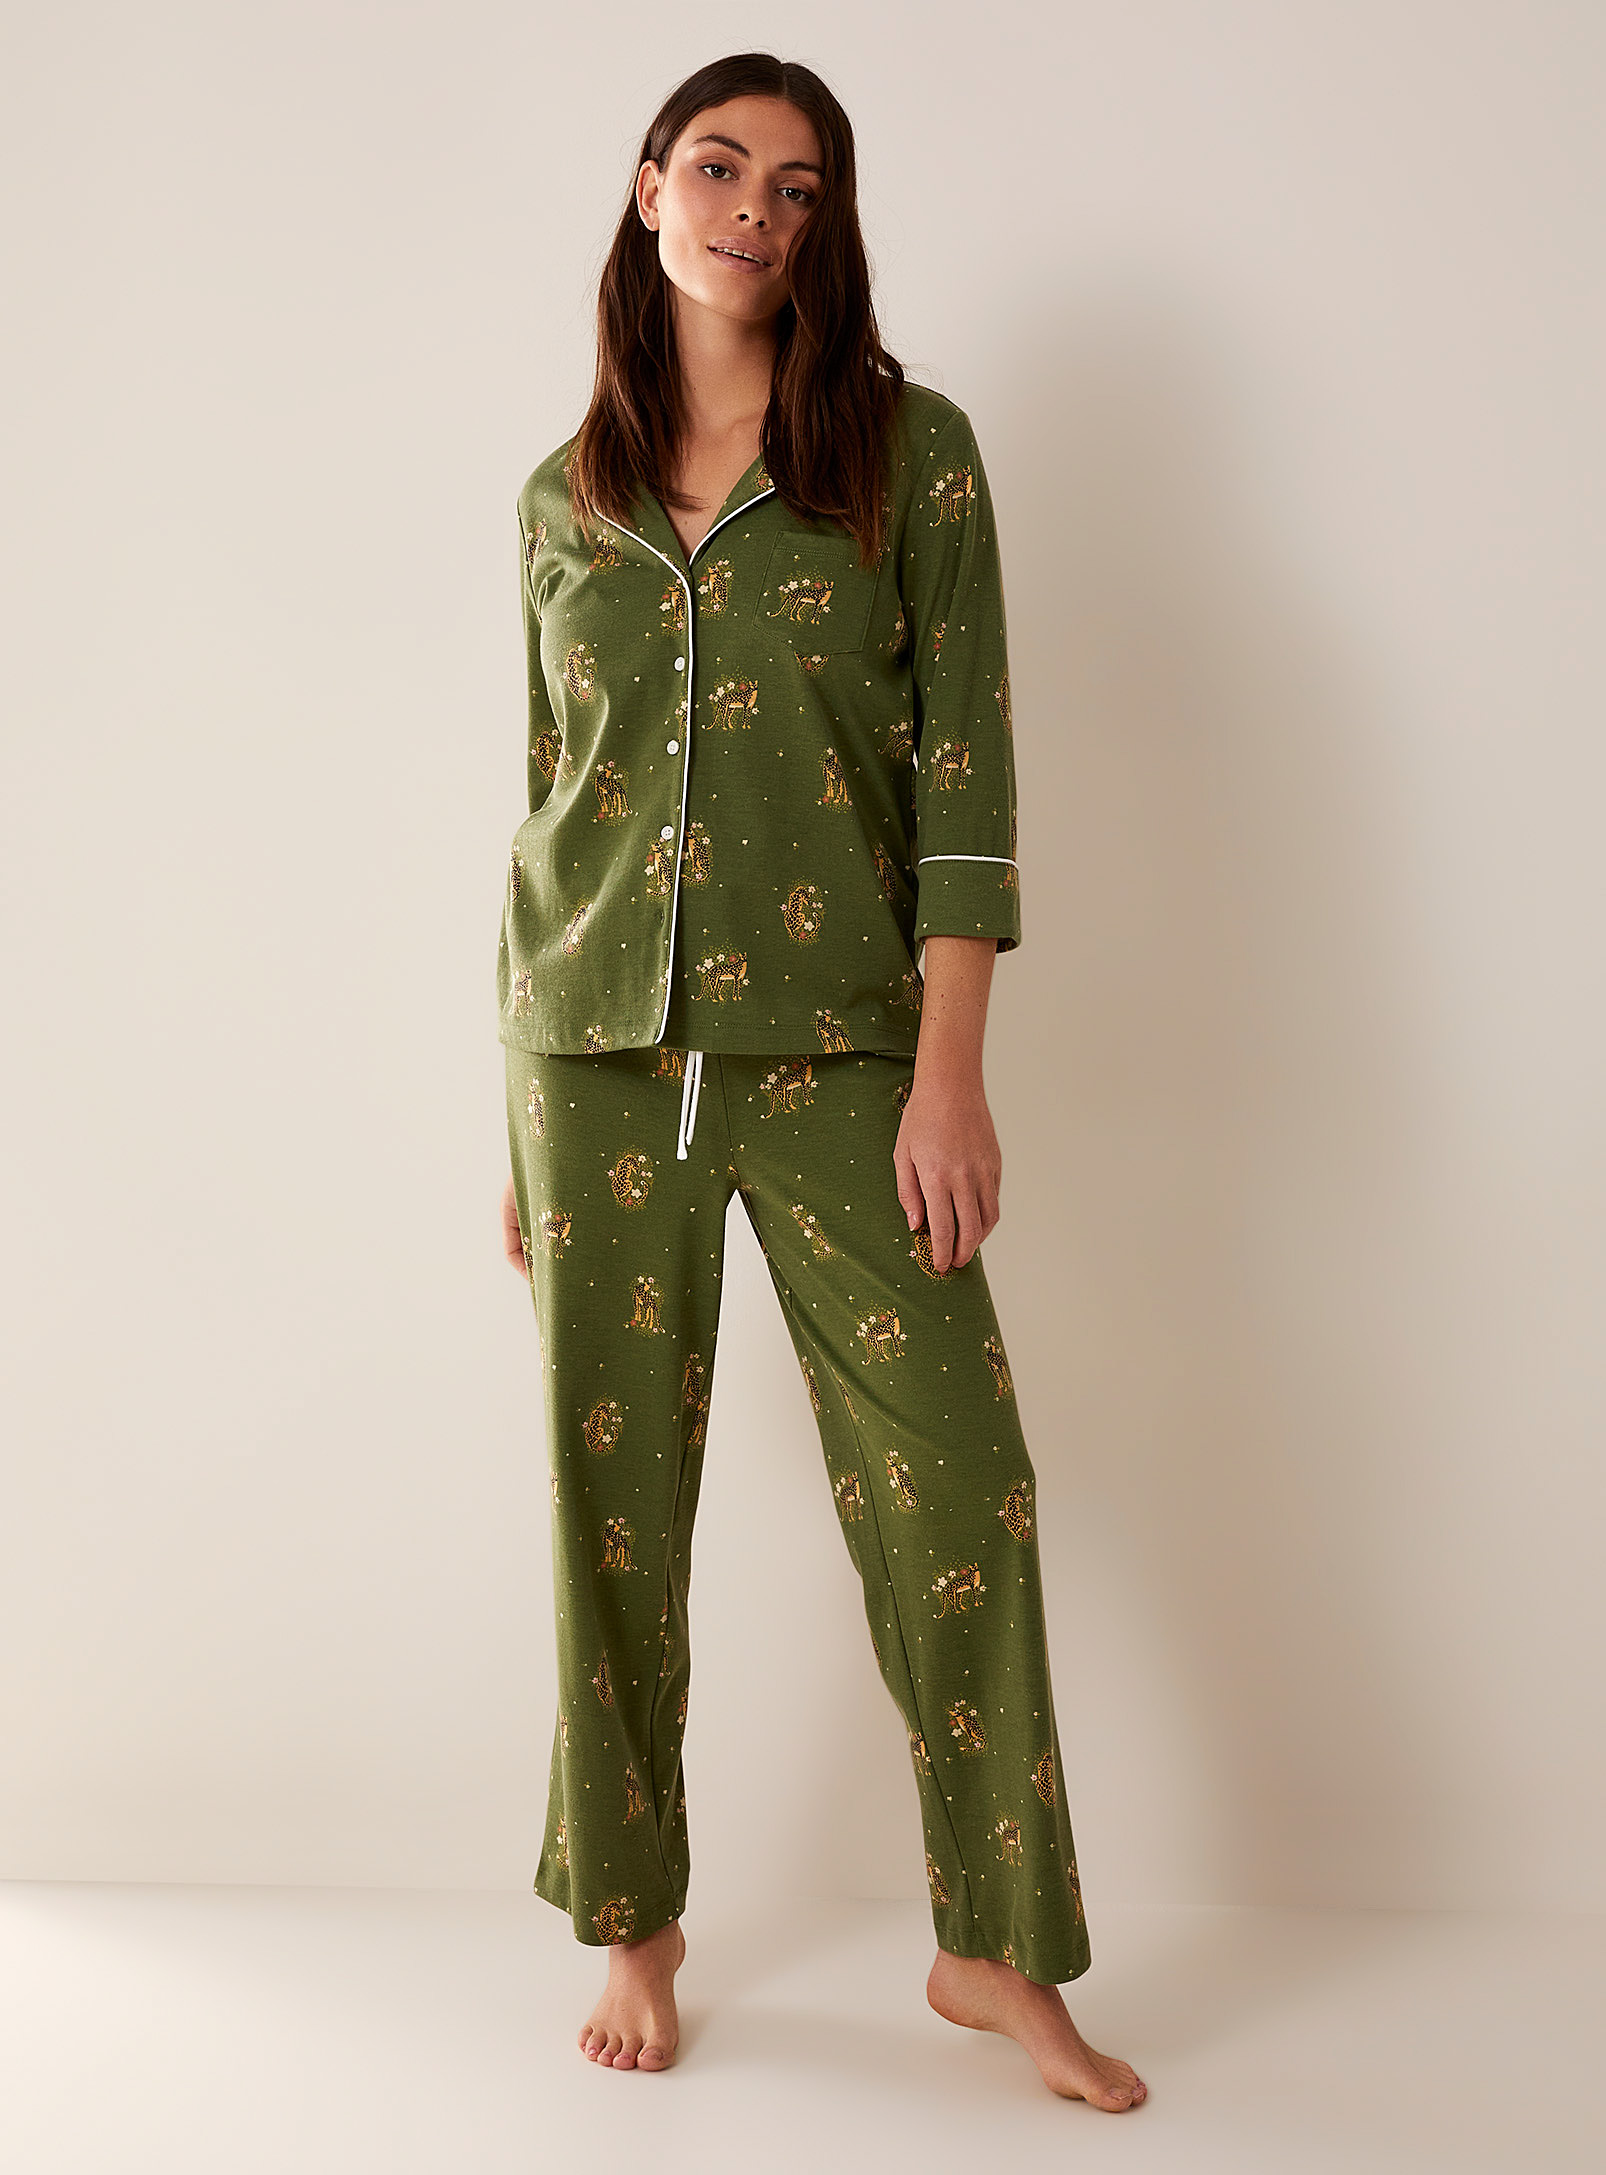 Miiyu - Women's Patterned organic cotton pyjama set